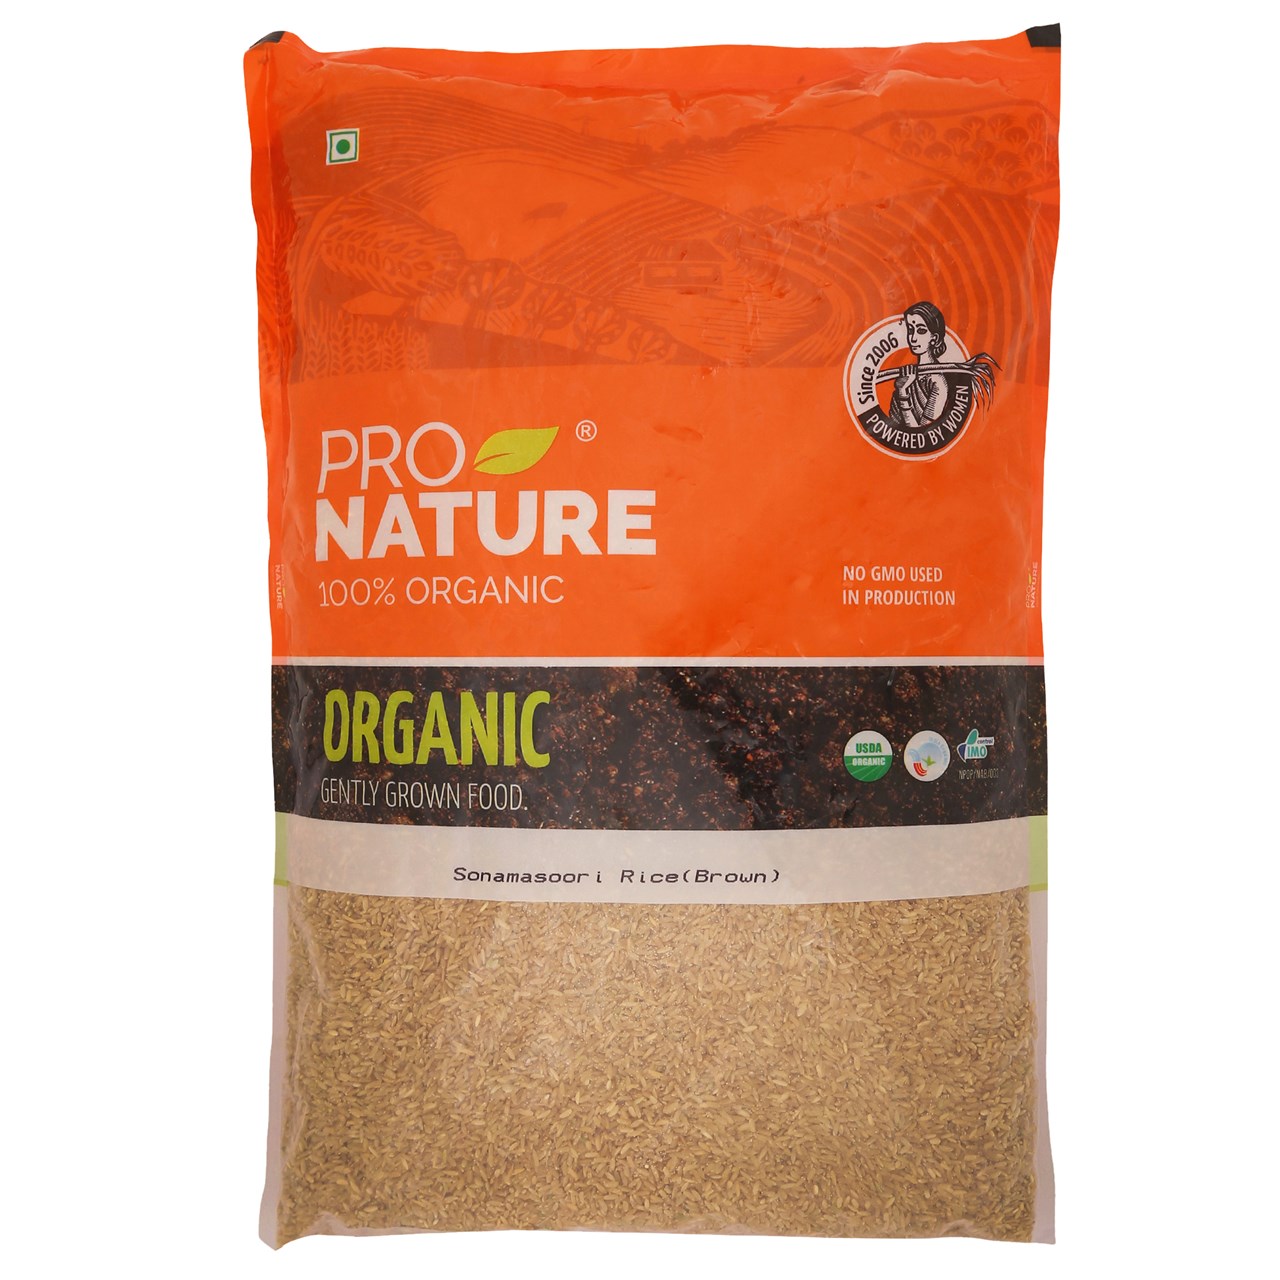 Picture of Pro Nature 100% Organic Sonamasoori Rice (Brown) 5 Kg